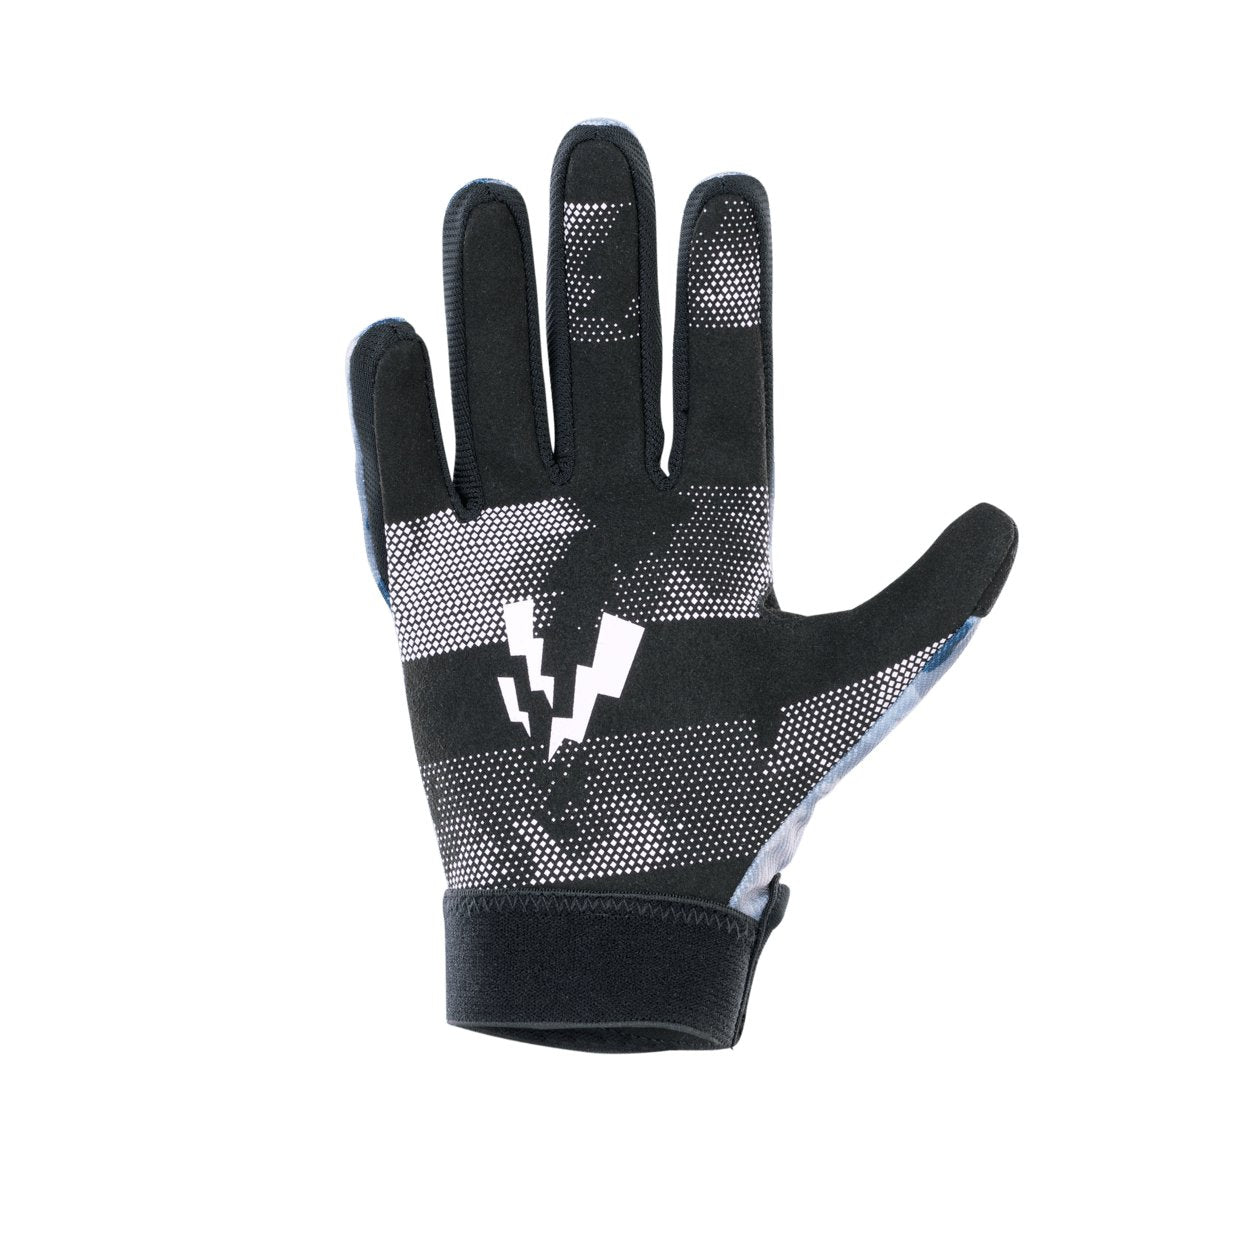 ION Youth MTB Gloves Scrub 2022 - Worthing Watersports - 9010583031163 - Gloves - ION Bike